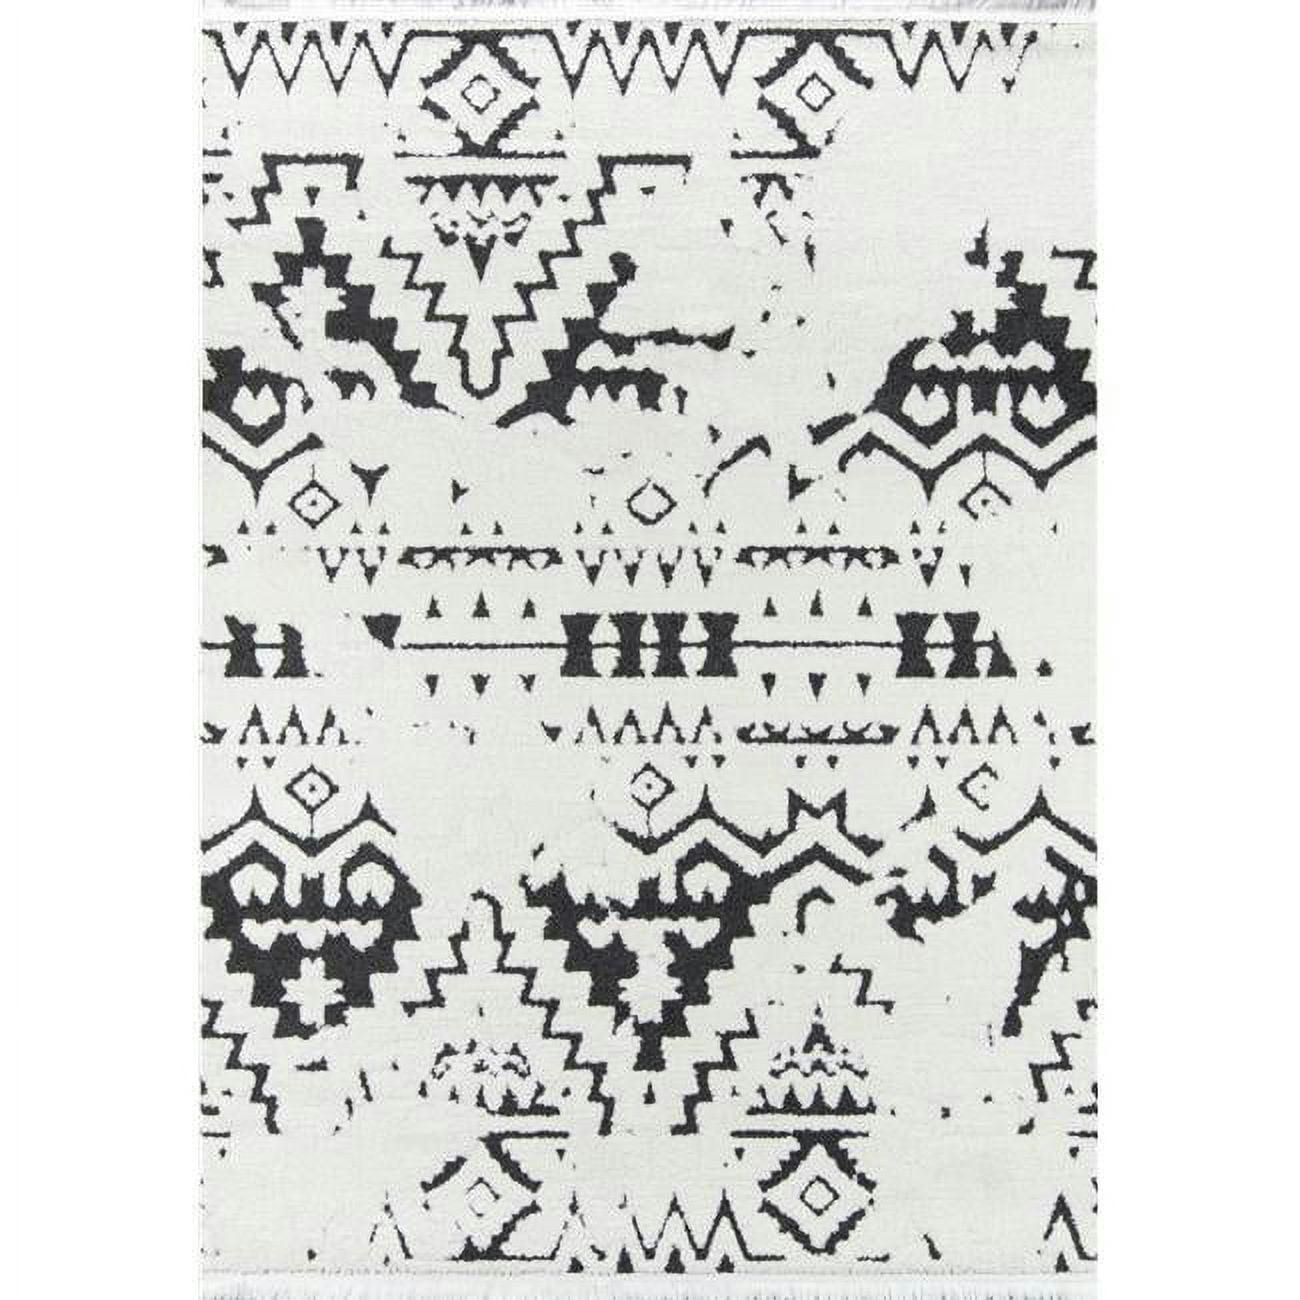 Ivory Tufted Wool-Blend Rectangular Handmade Area Rug, 7'6" x 9'6"